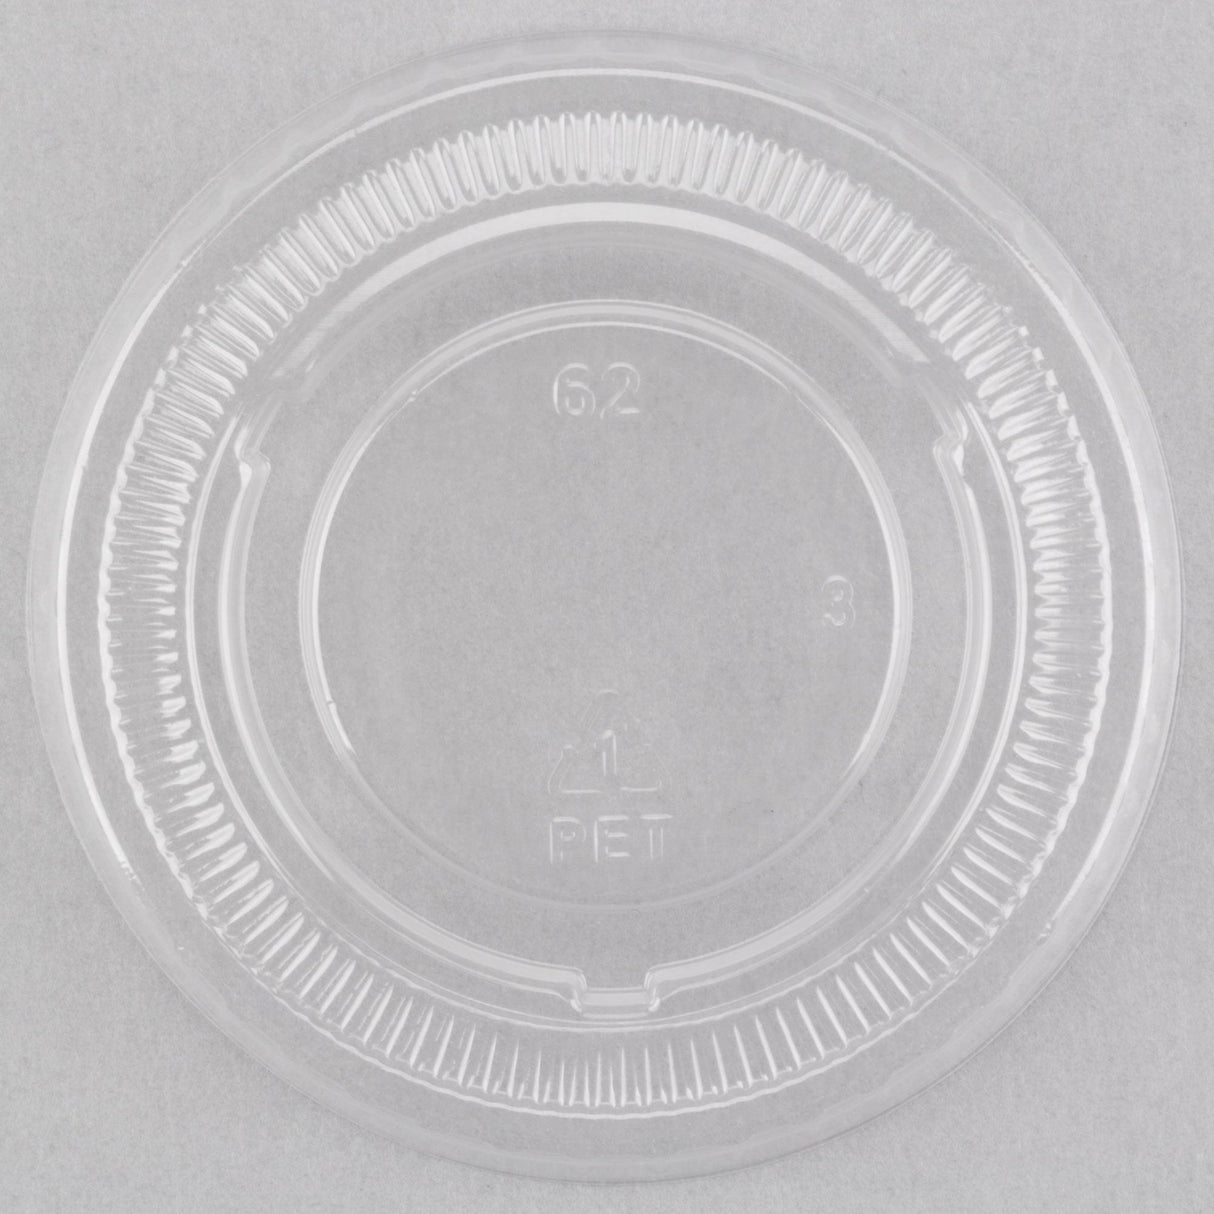 PET Sauce Lid Fit 1.5/2oz Sauce Cup (Lid Only) - 2500 Pcs - HD Plastic Product (Canada). Inc